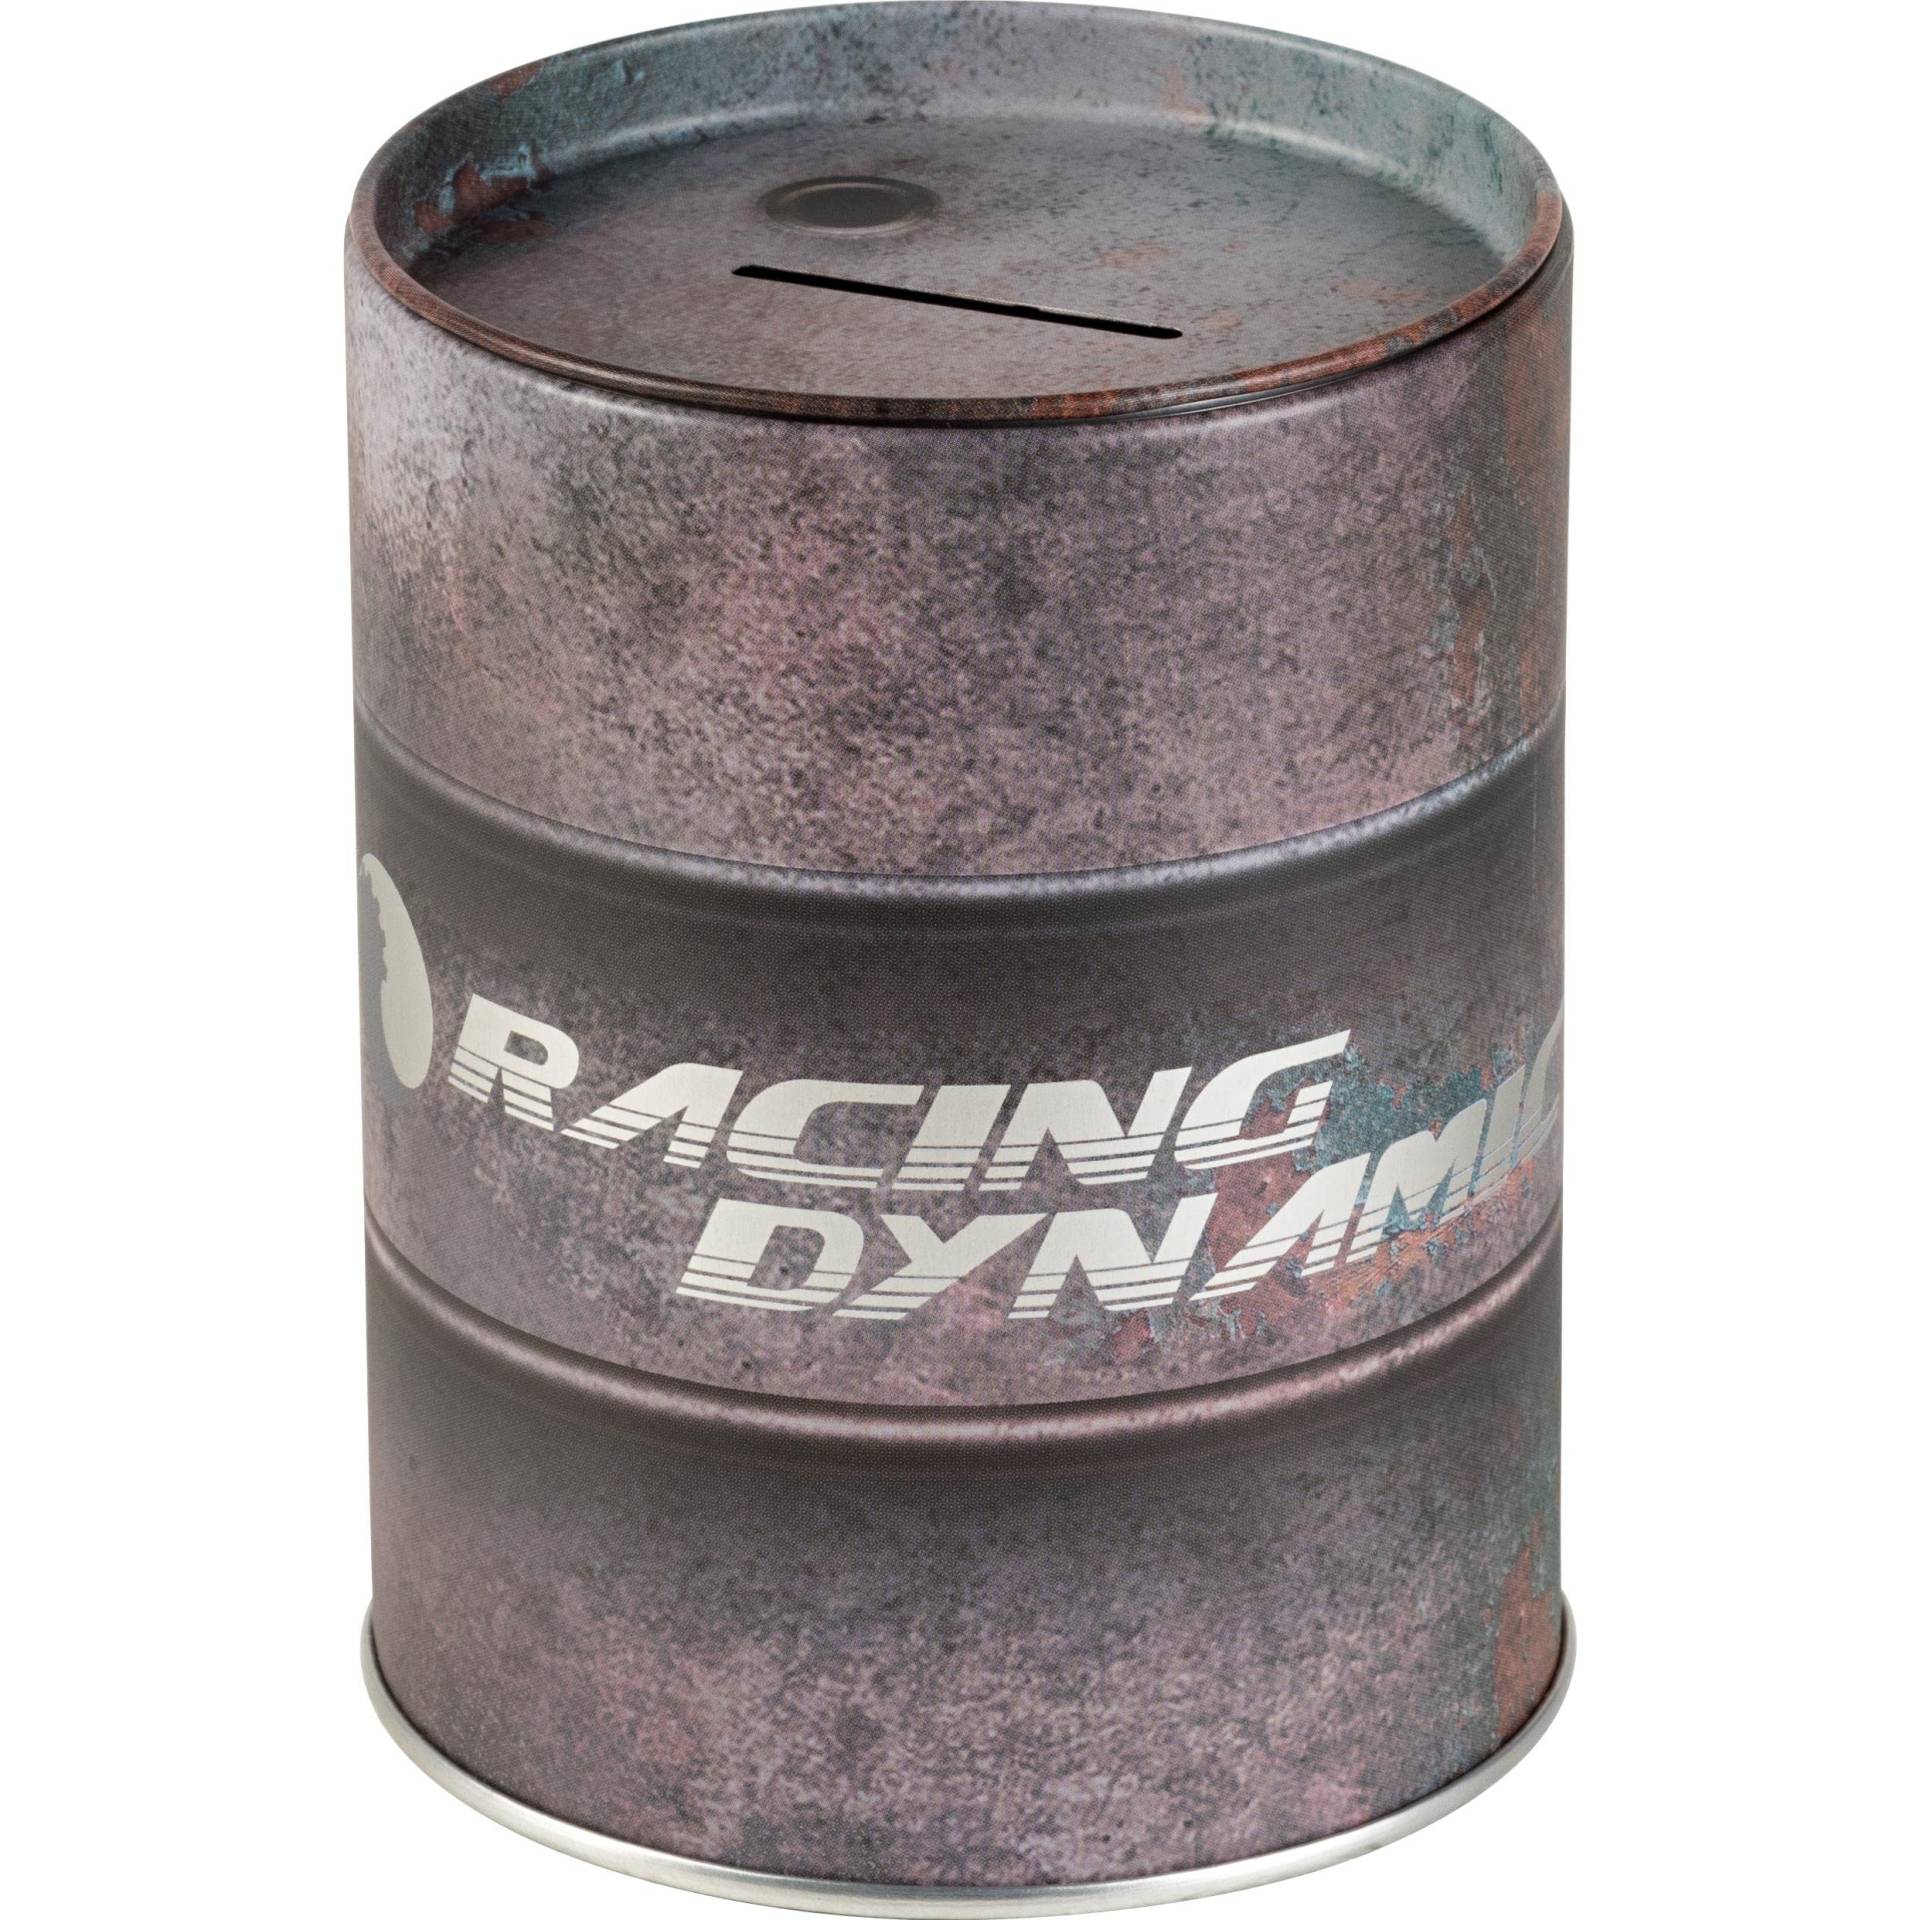 Racing Dynamic Spardose Spardose Öltonne 10 x 13 cm, Unisex, Multipurpose, Ganzjährig, Metall von Racing Dynamic